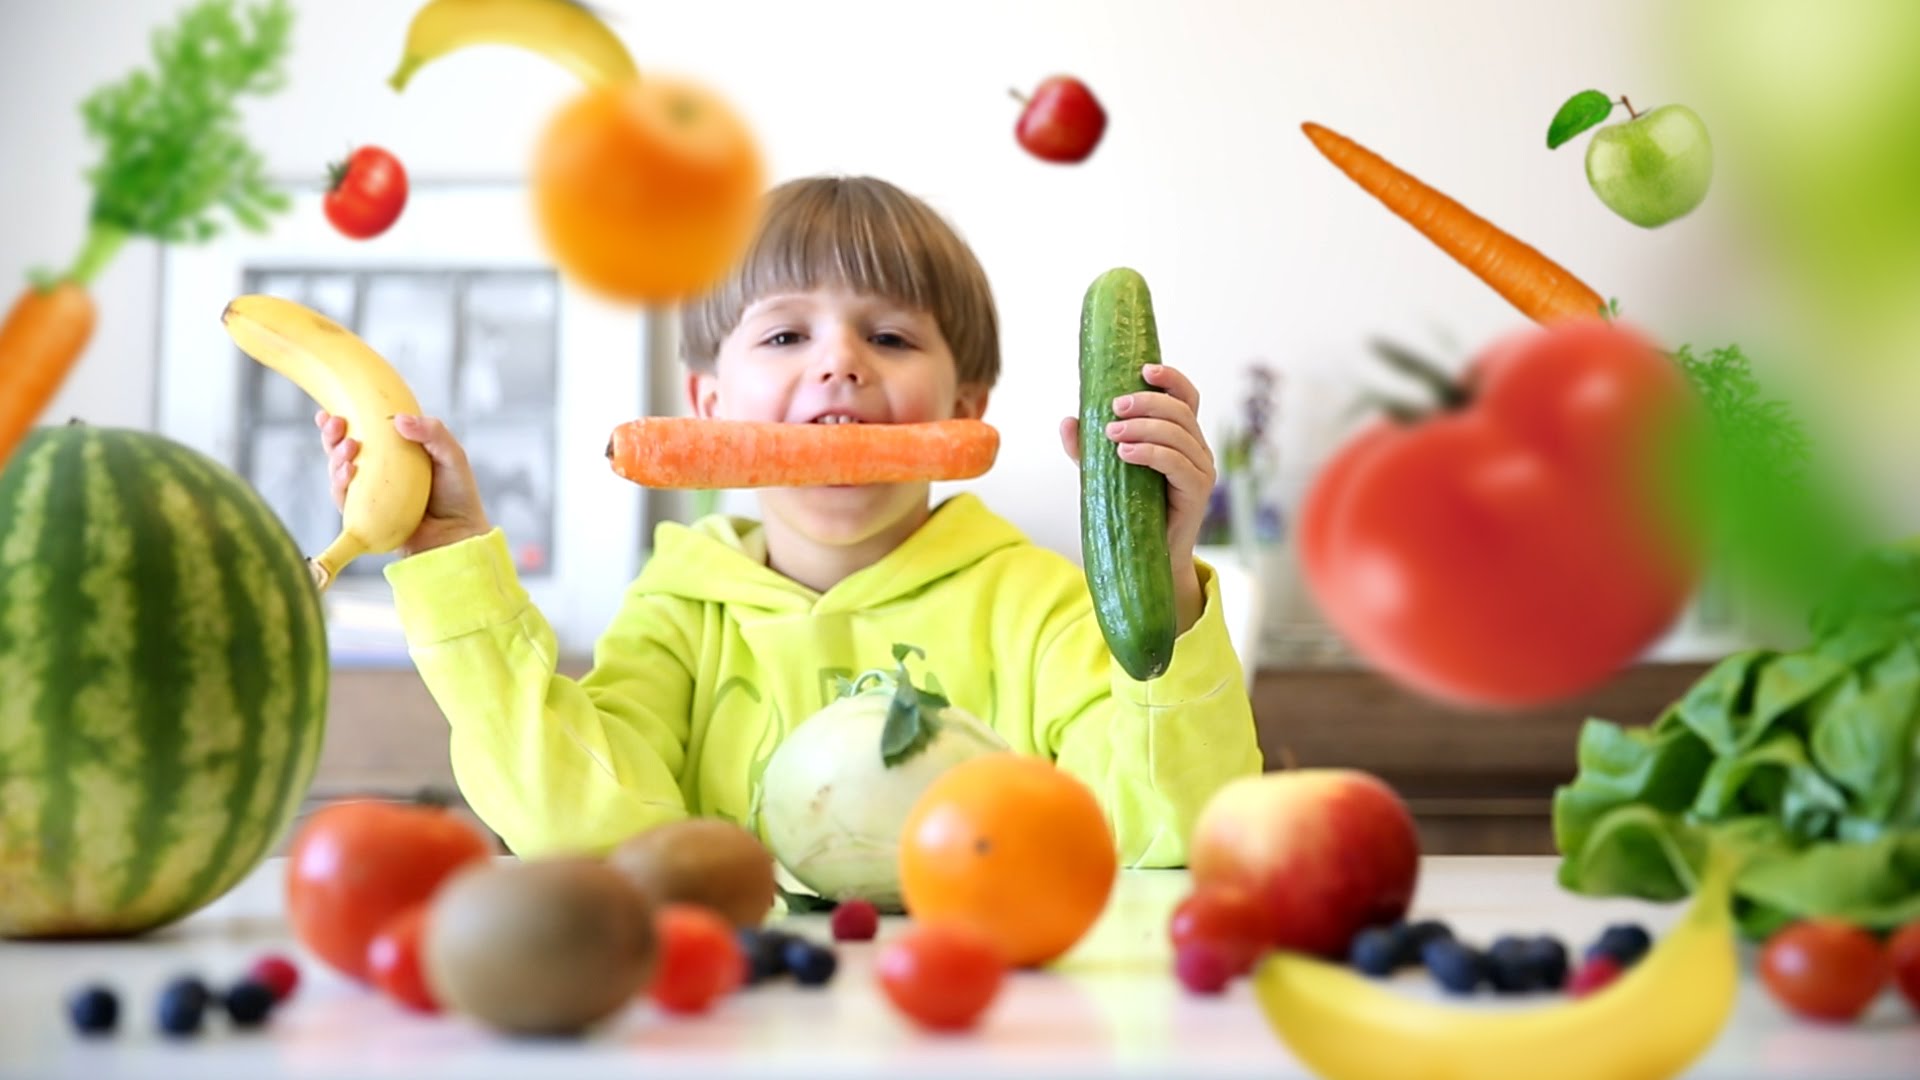 Fresh Food Challenge - Fruits & Vegetables - YouTube